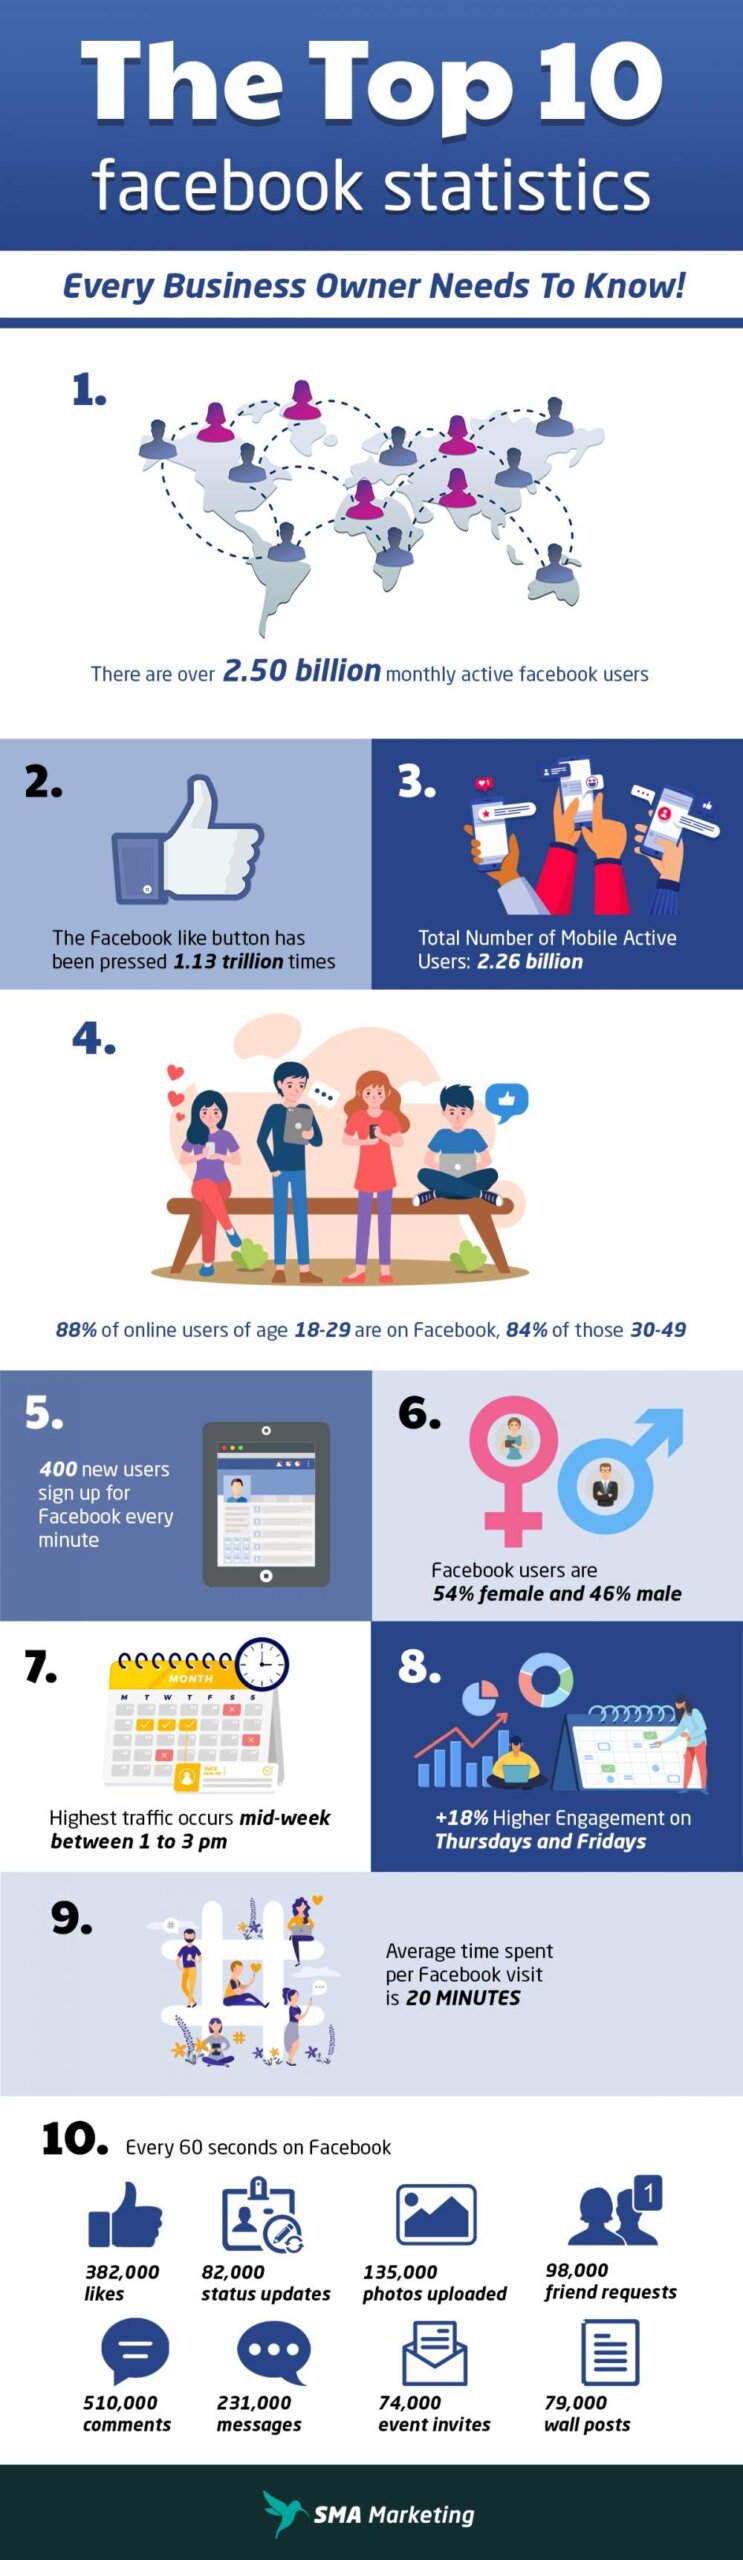 Top 10 Facebook Statistics